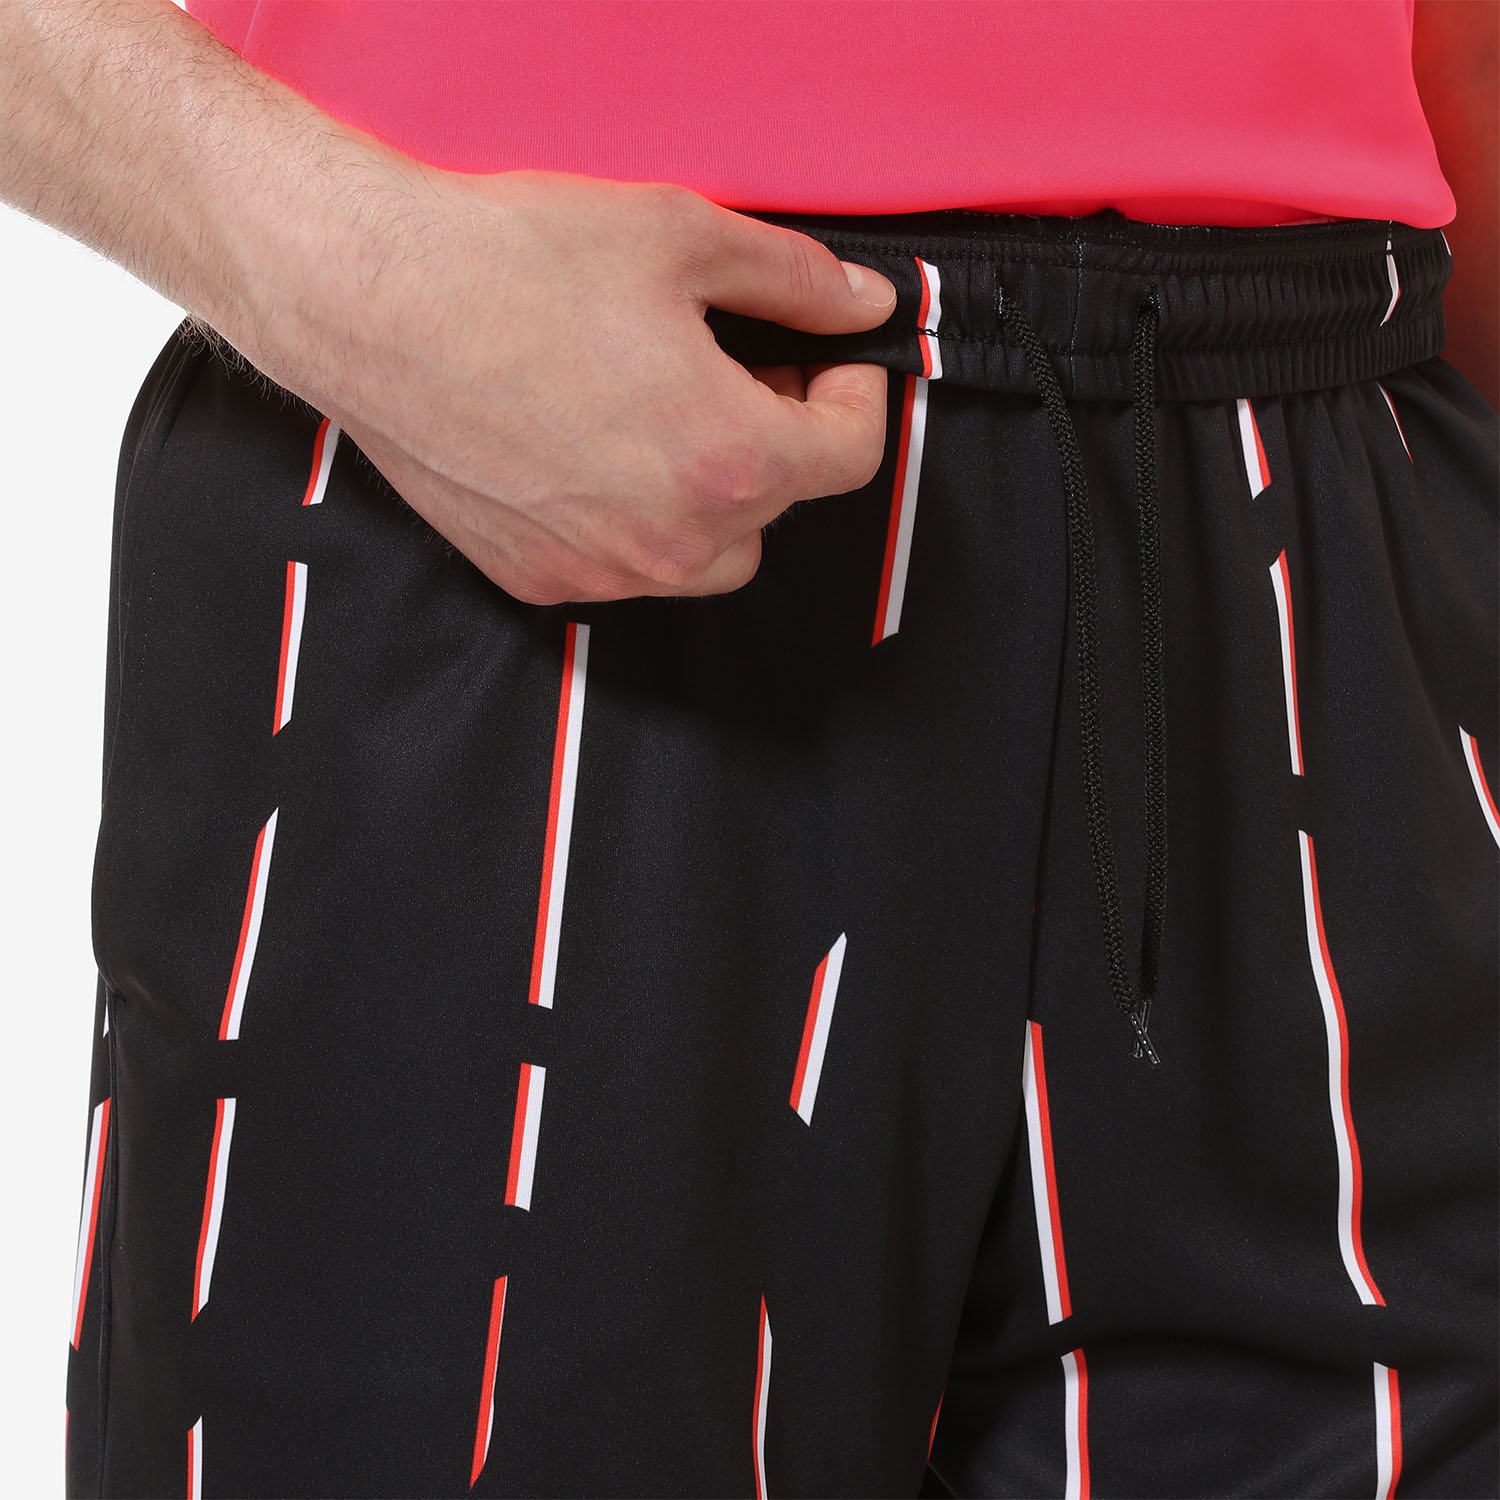 Australian Stripes Ace 7.5in Shorts - Nero